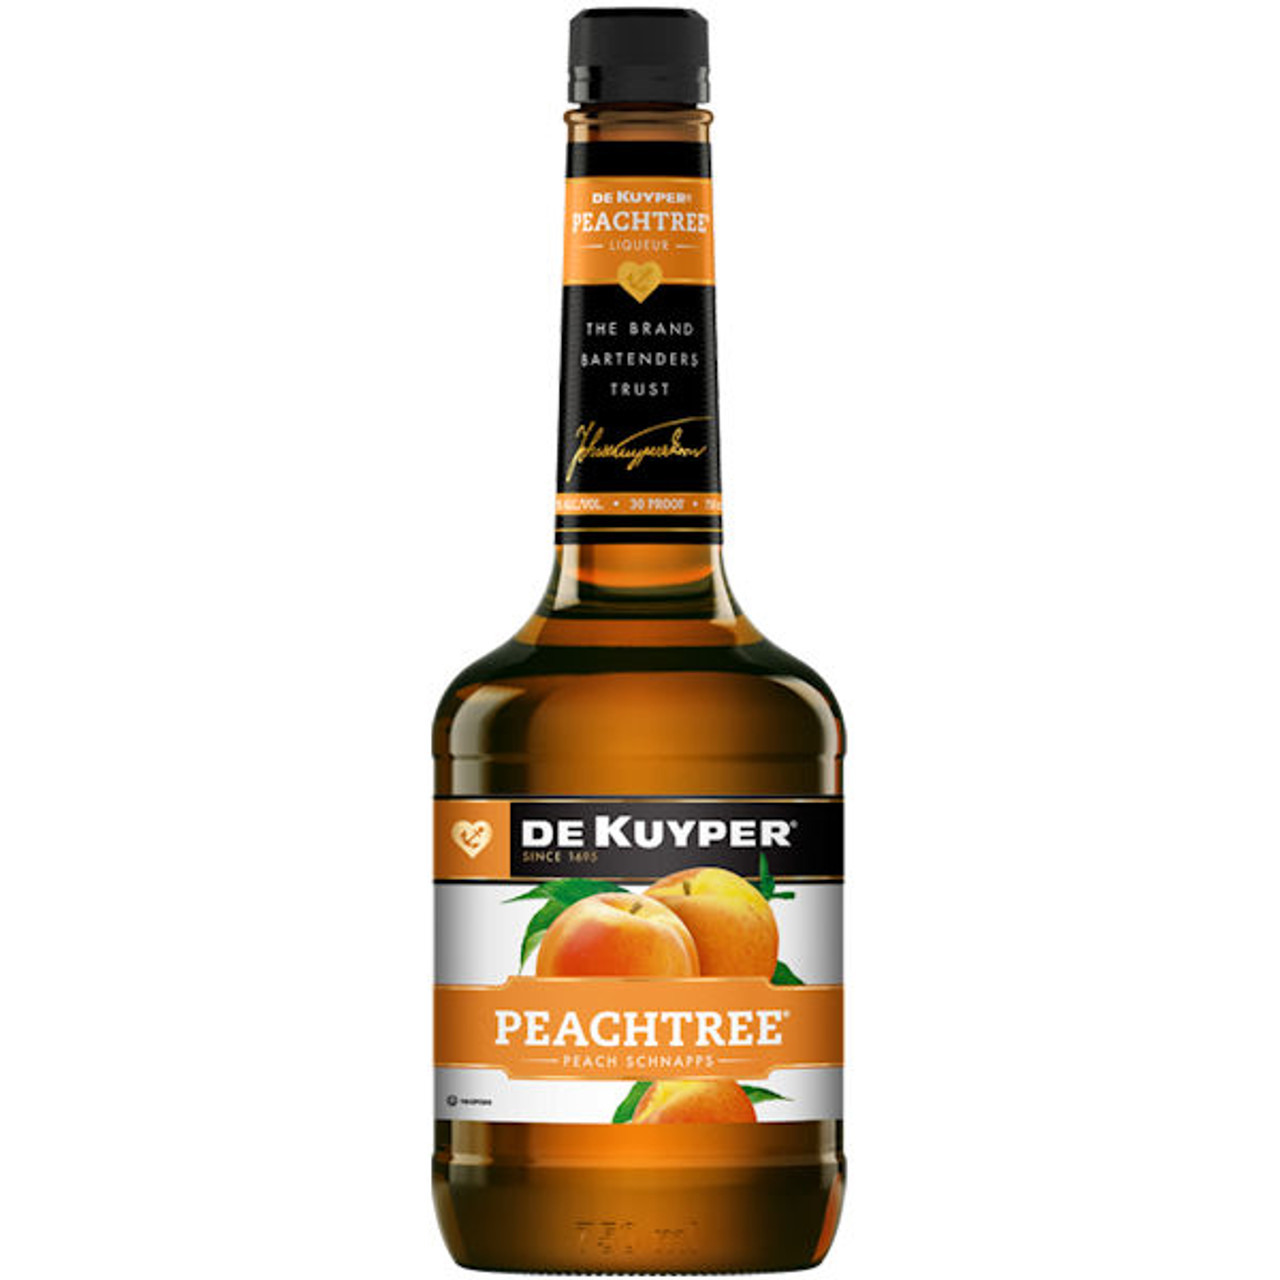 Dekuyper Peachtree Peach Schnapps Liqueur 1L